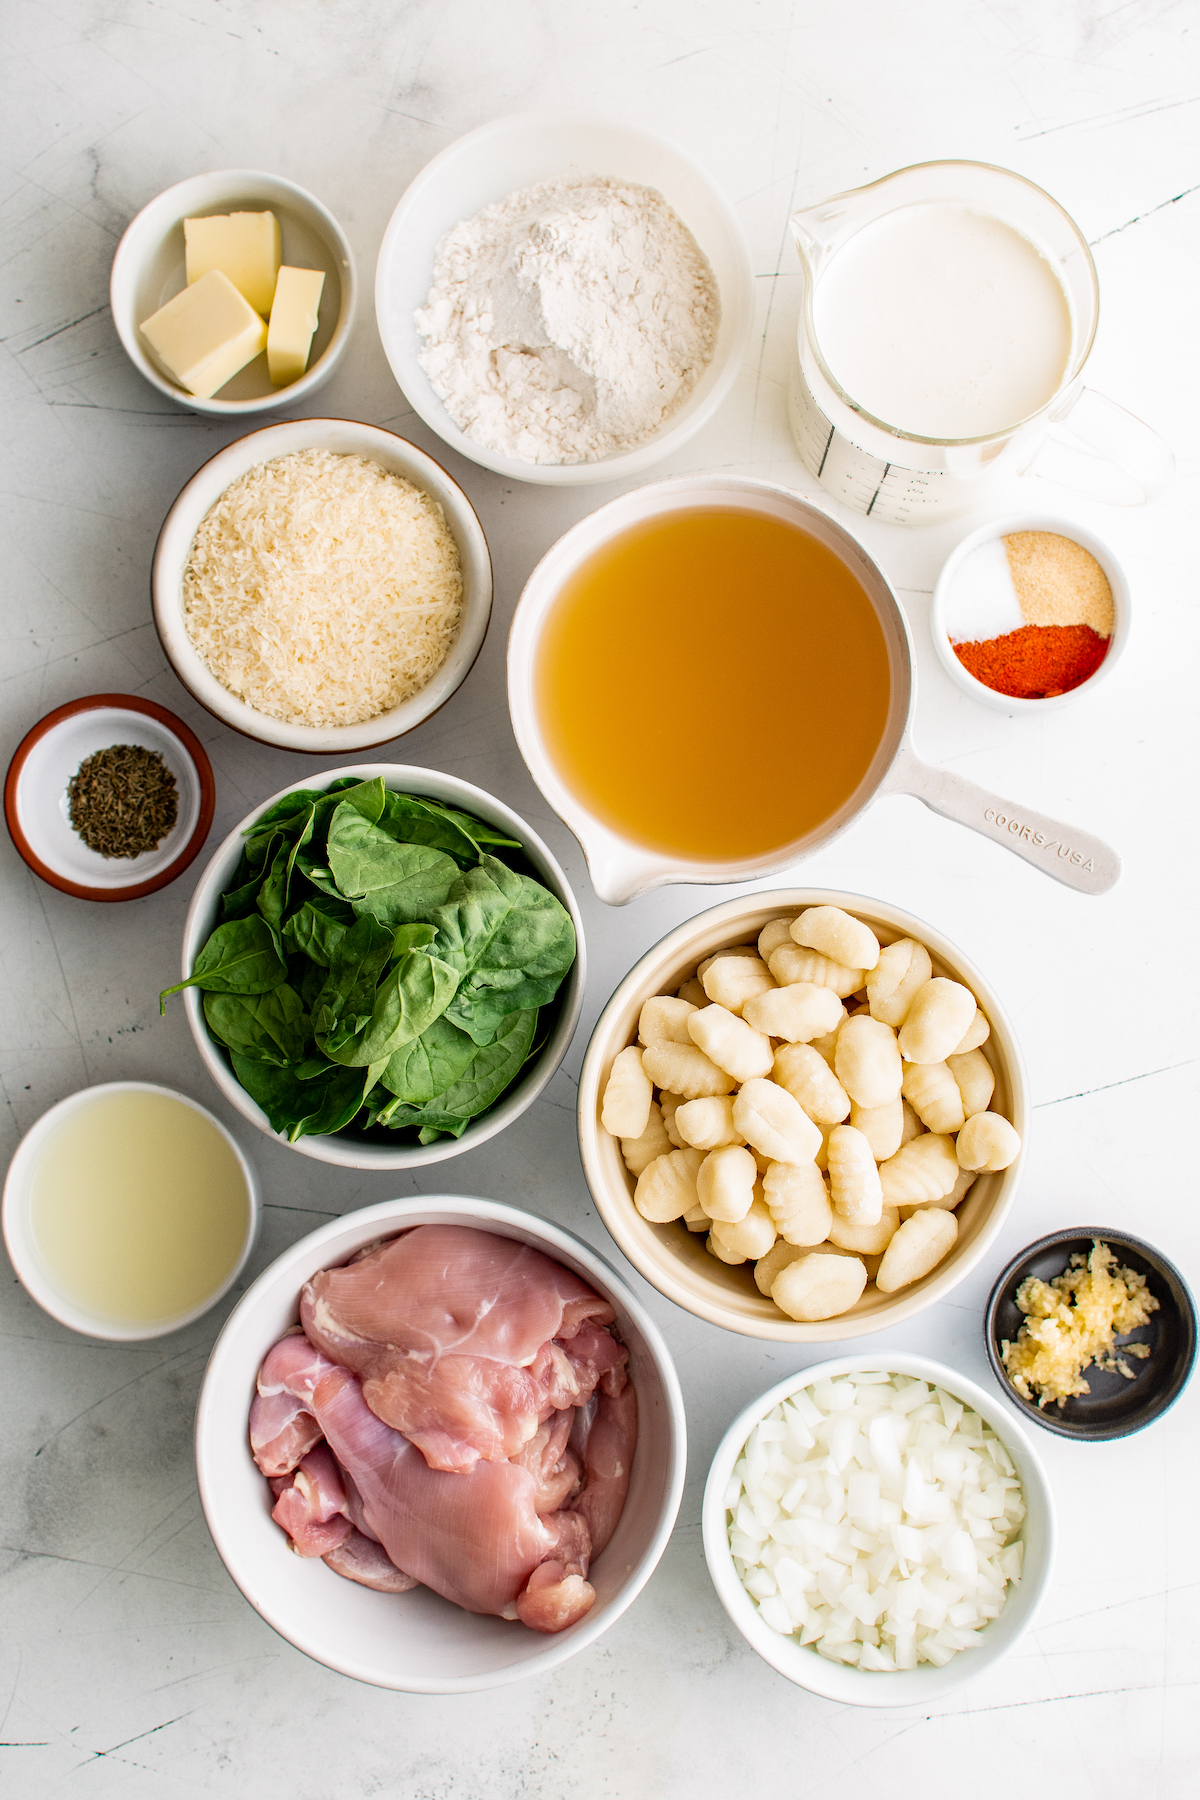 Ingredients for chicken and gnocchi pasta.